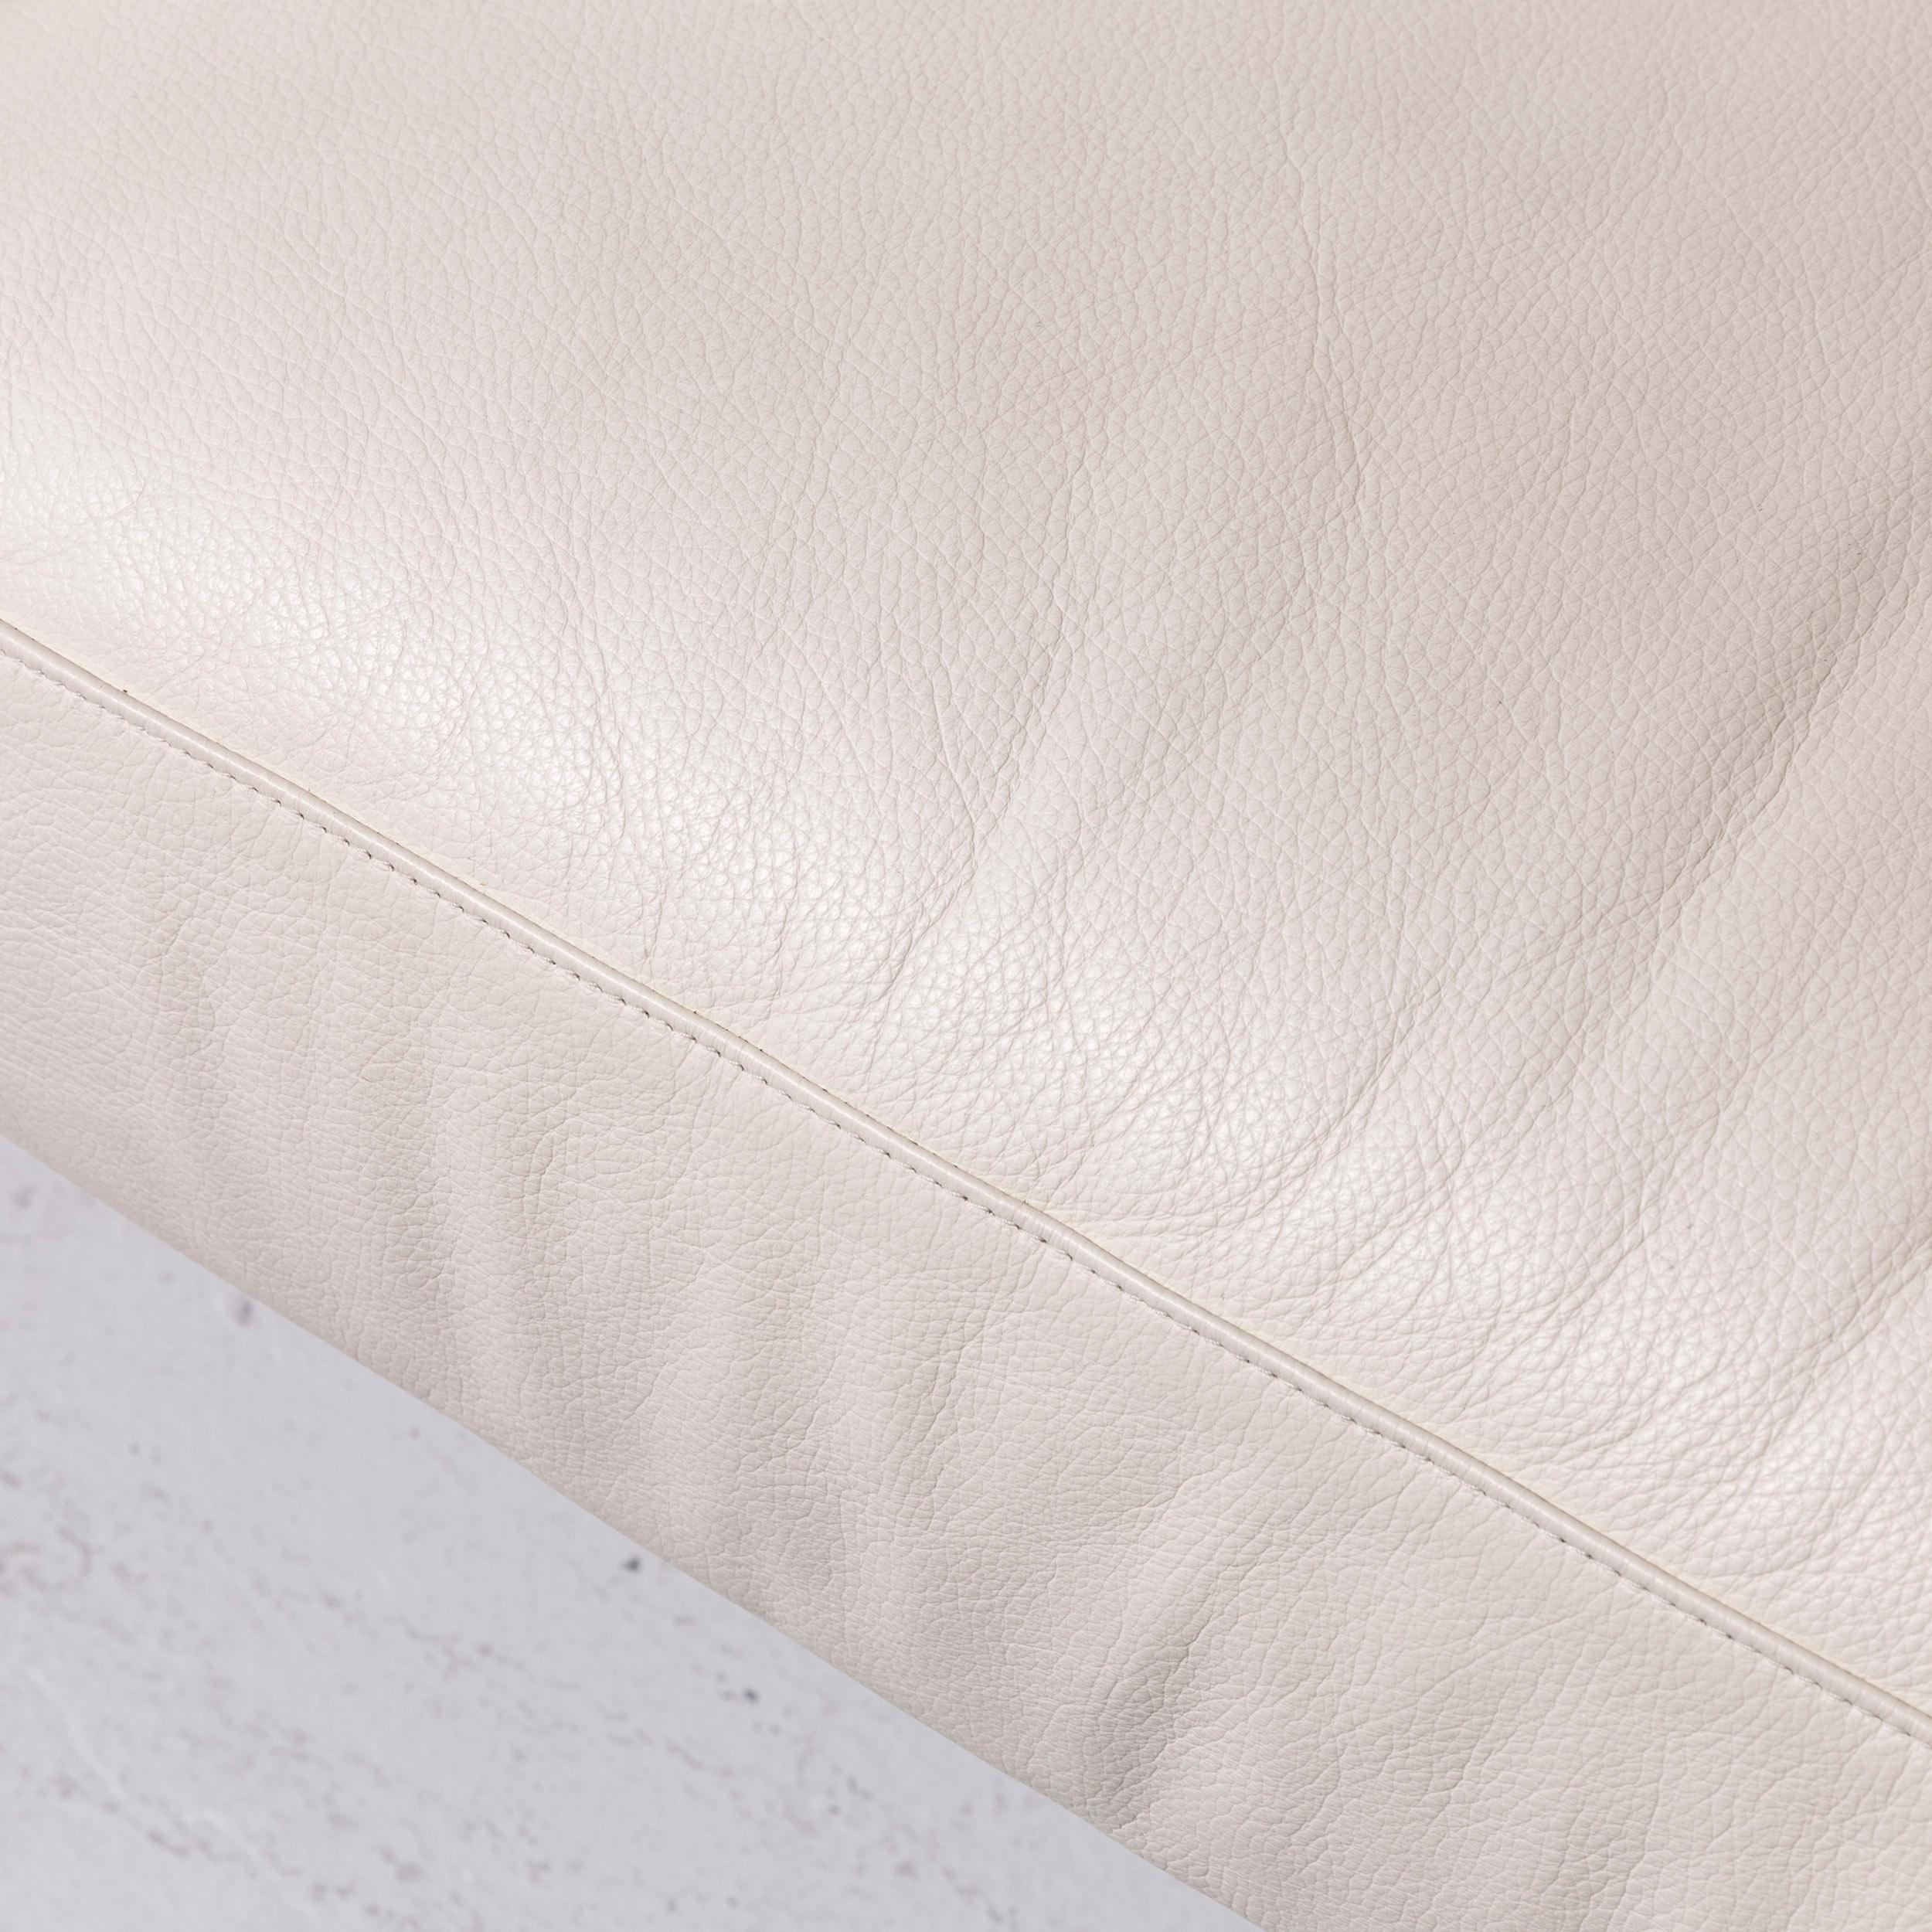 WK Wohnen Gaetano 687 Designer Leather Sofa Set White Genuine Leather 2